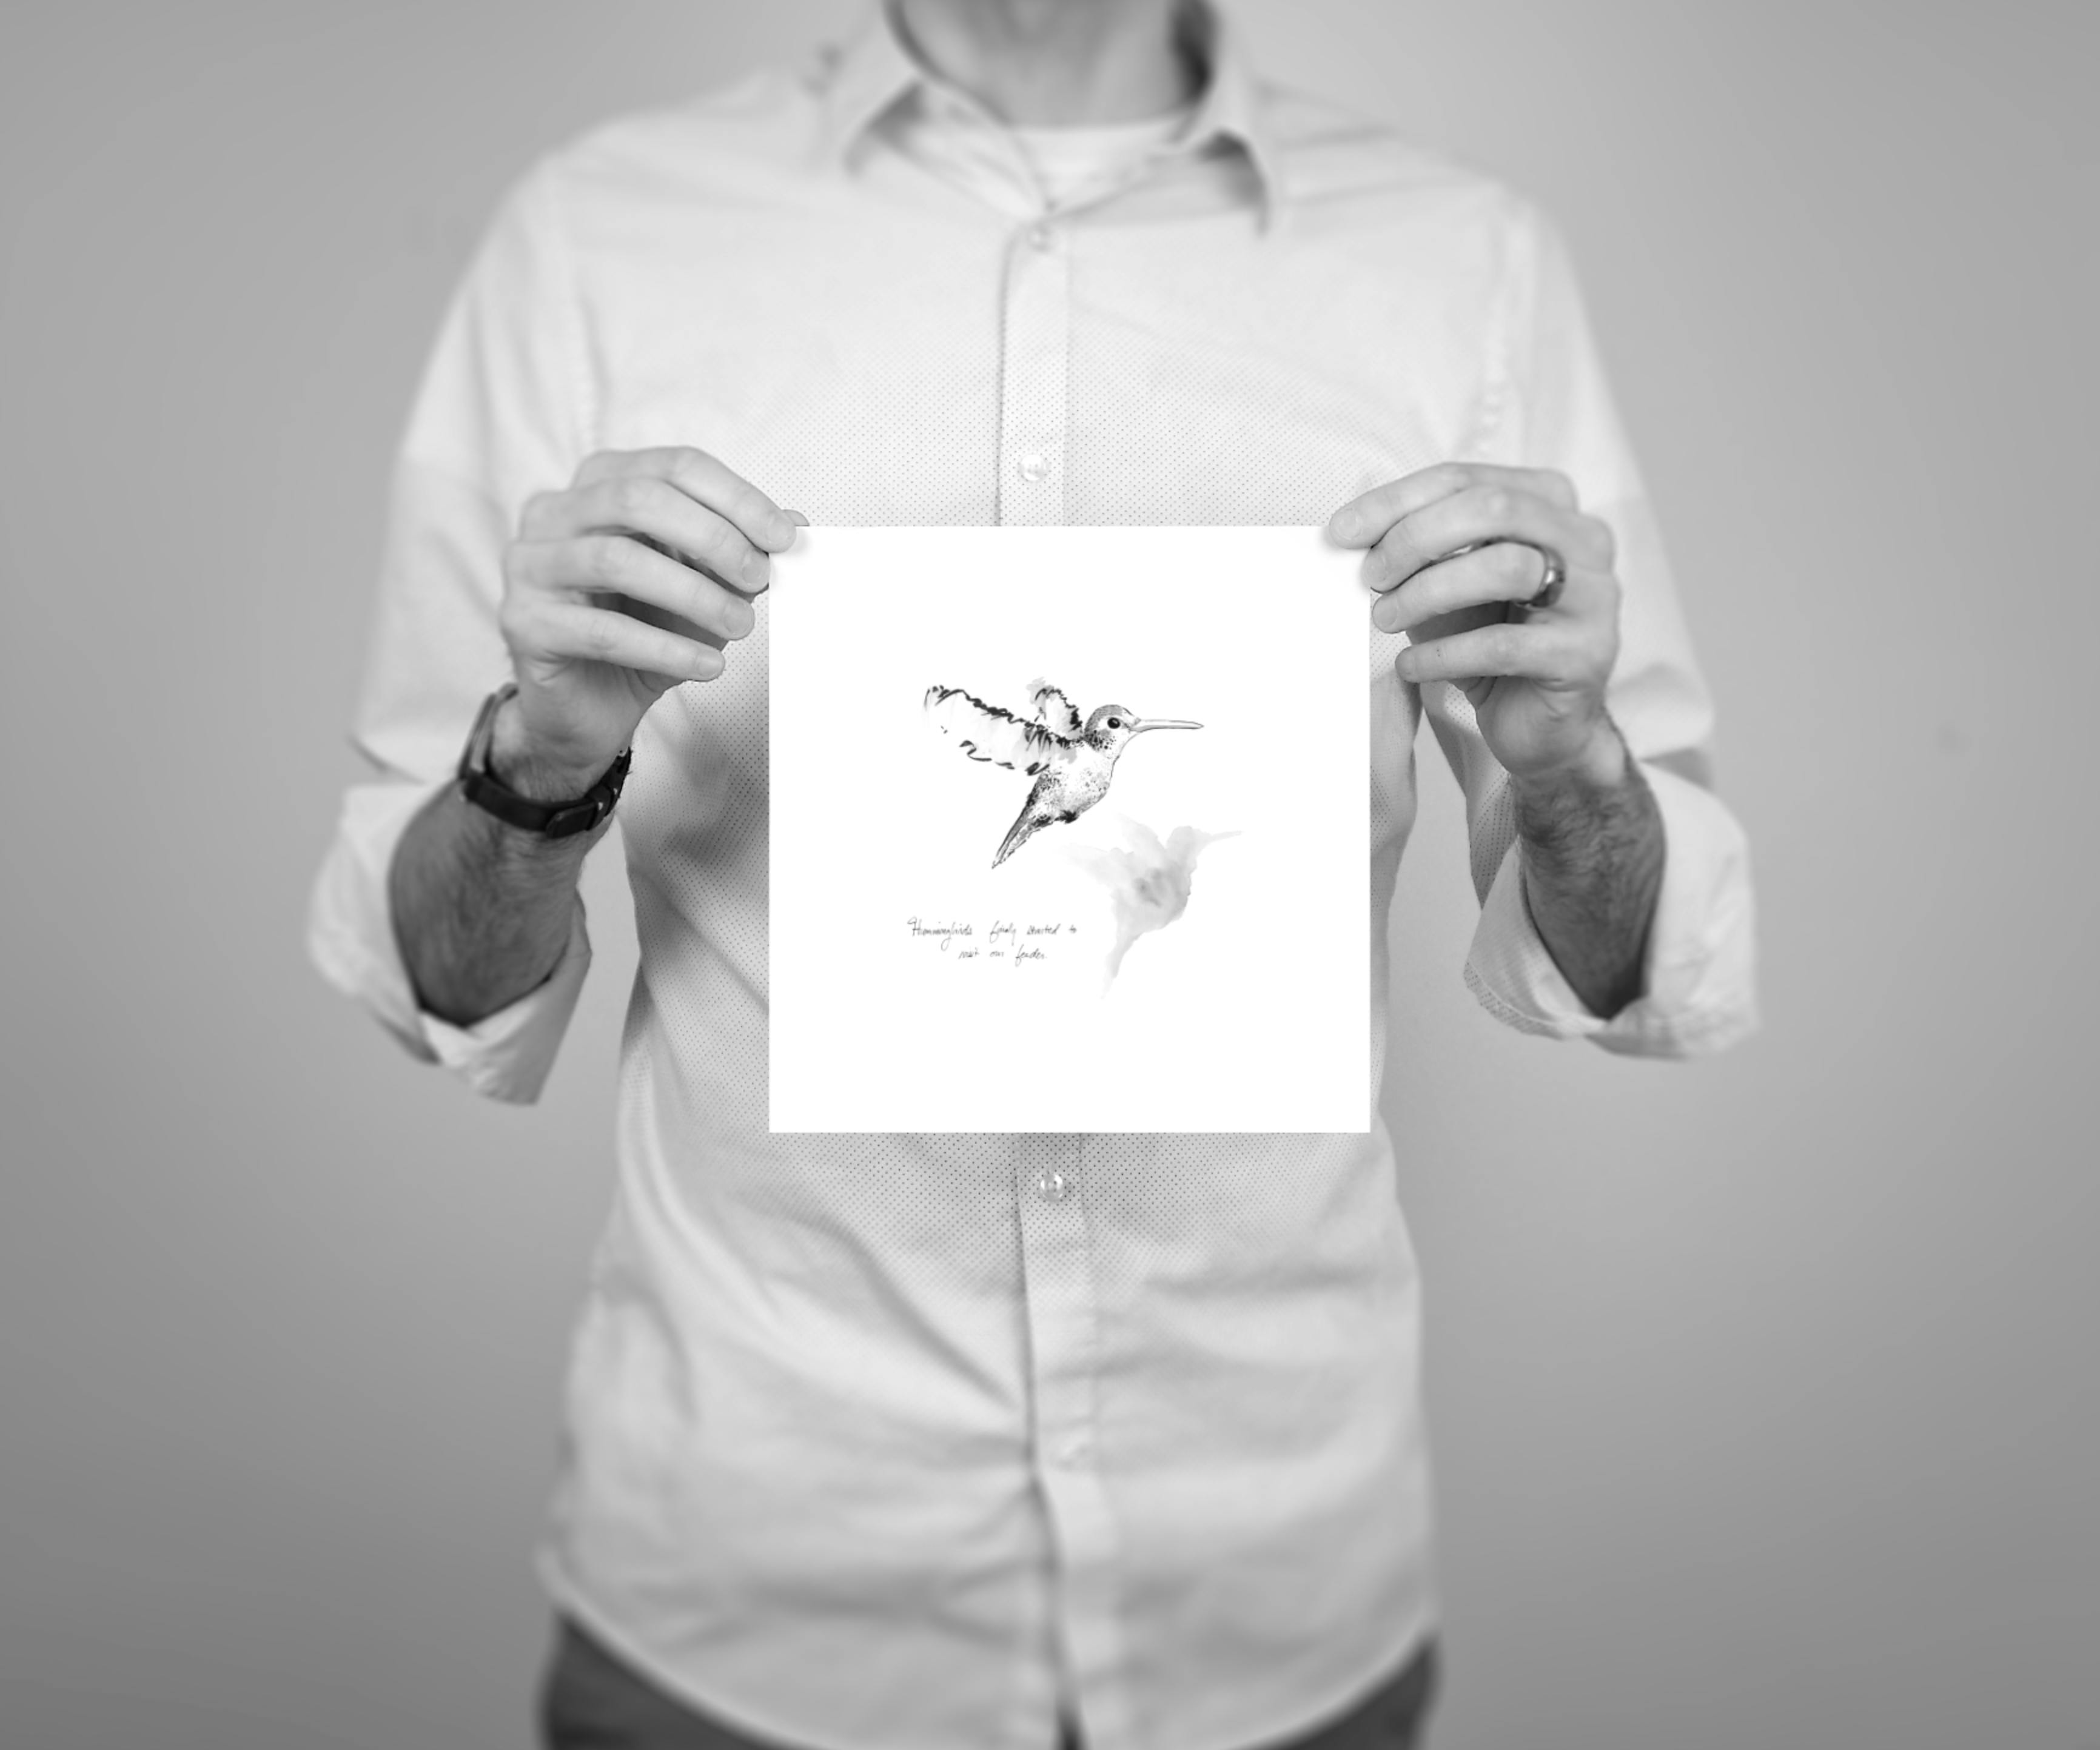 Hummingbird: 6 x 6" giclee print edition